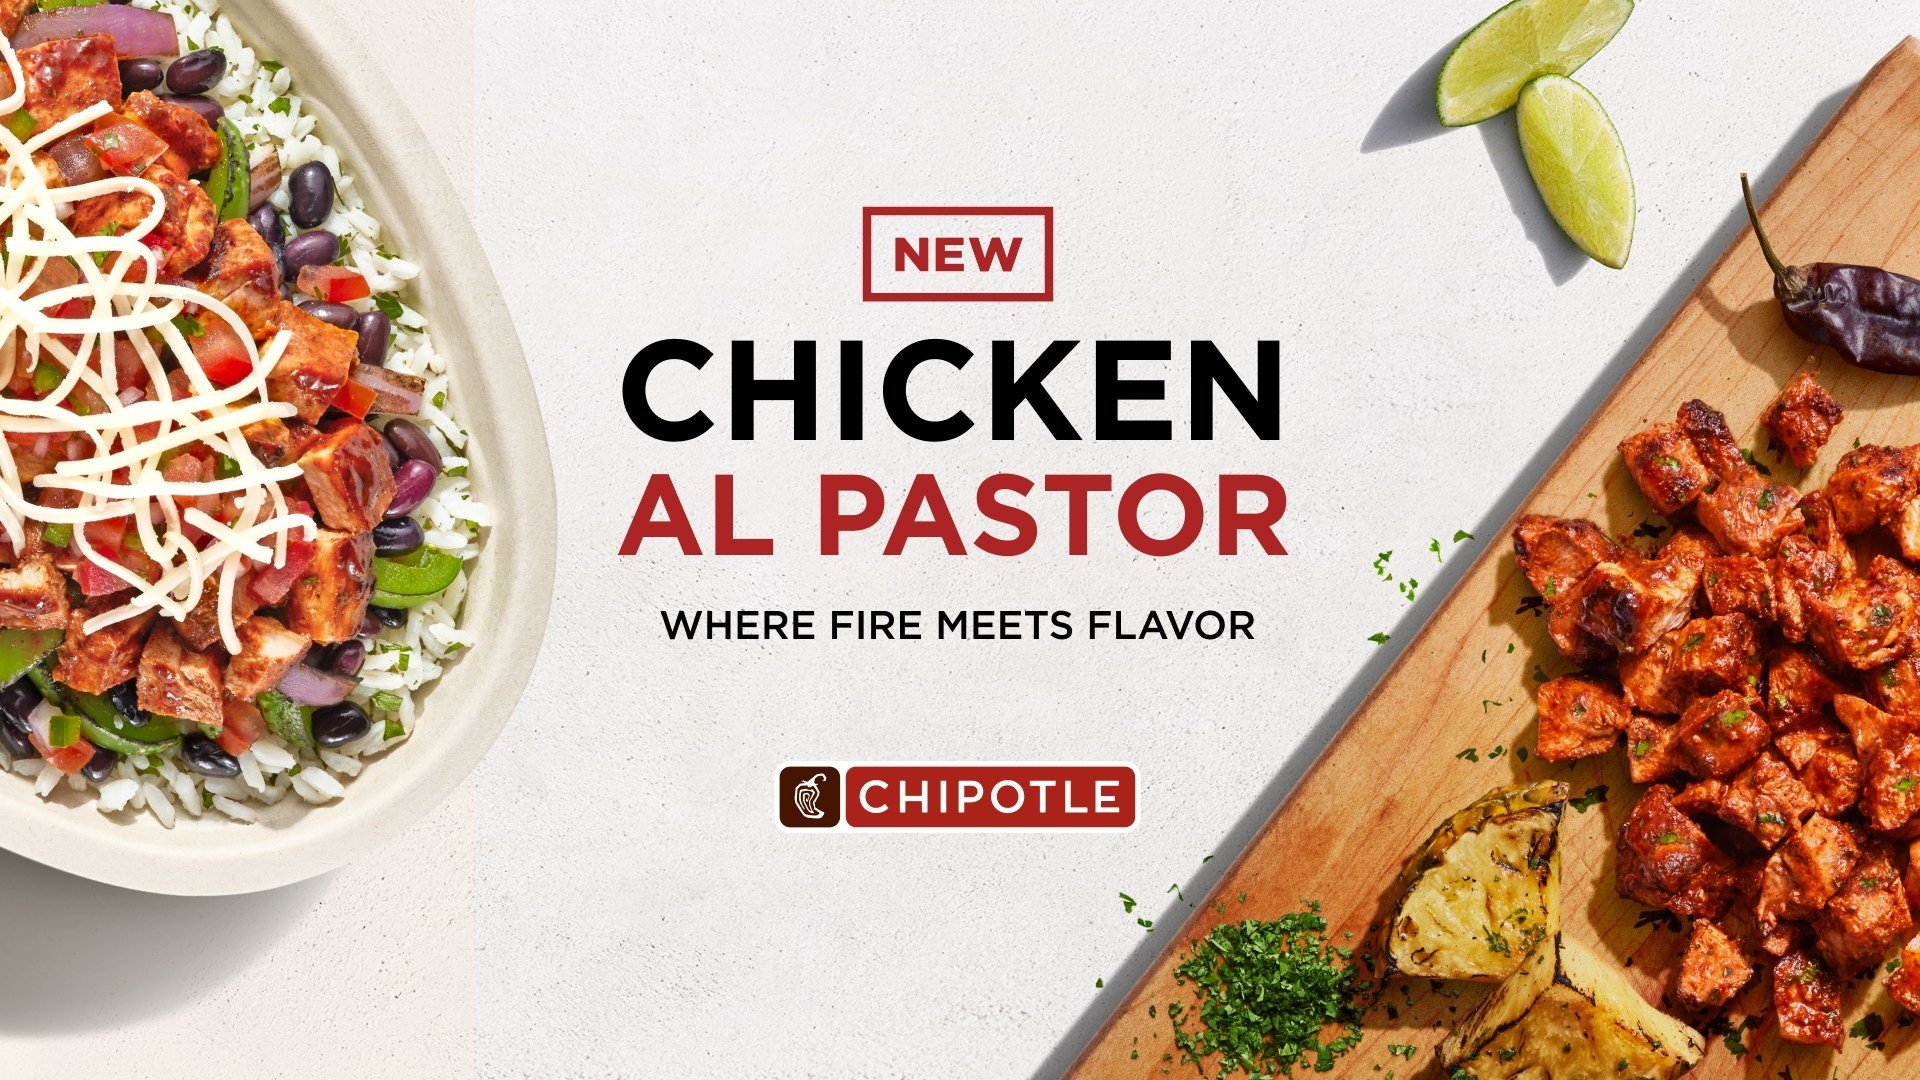 Chipotle Chicken Al Pastor Food Photographer.jpg